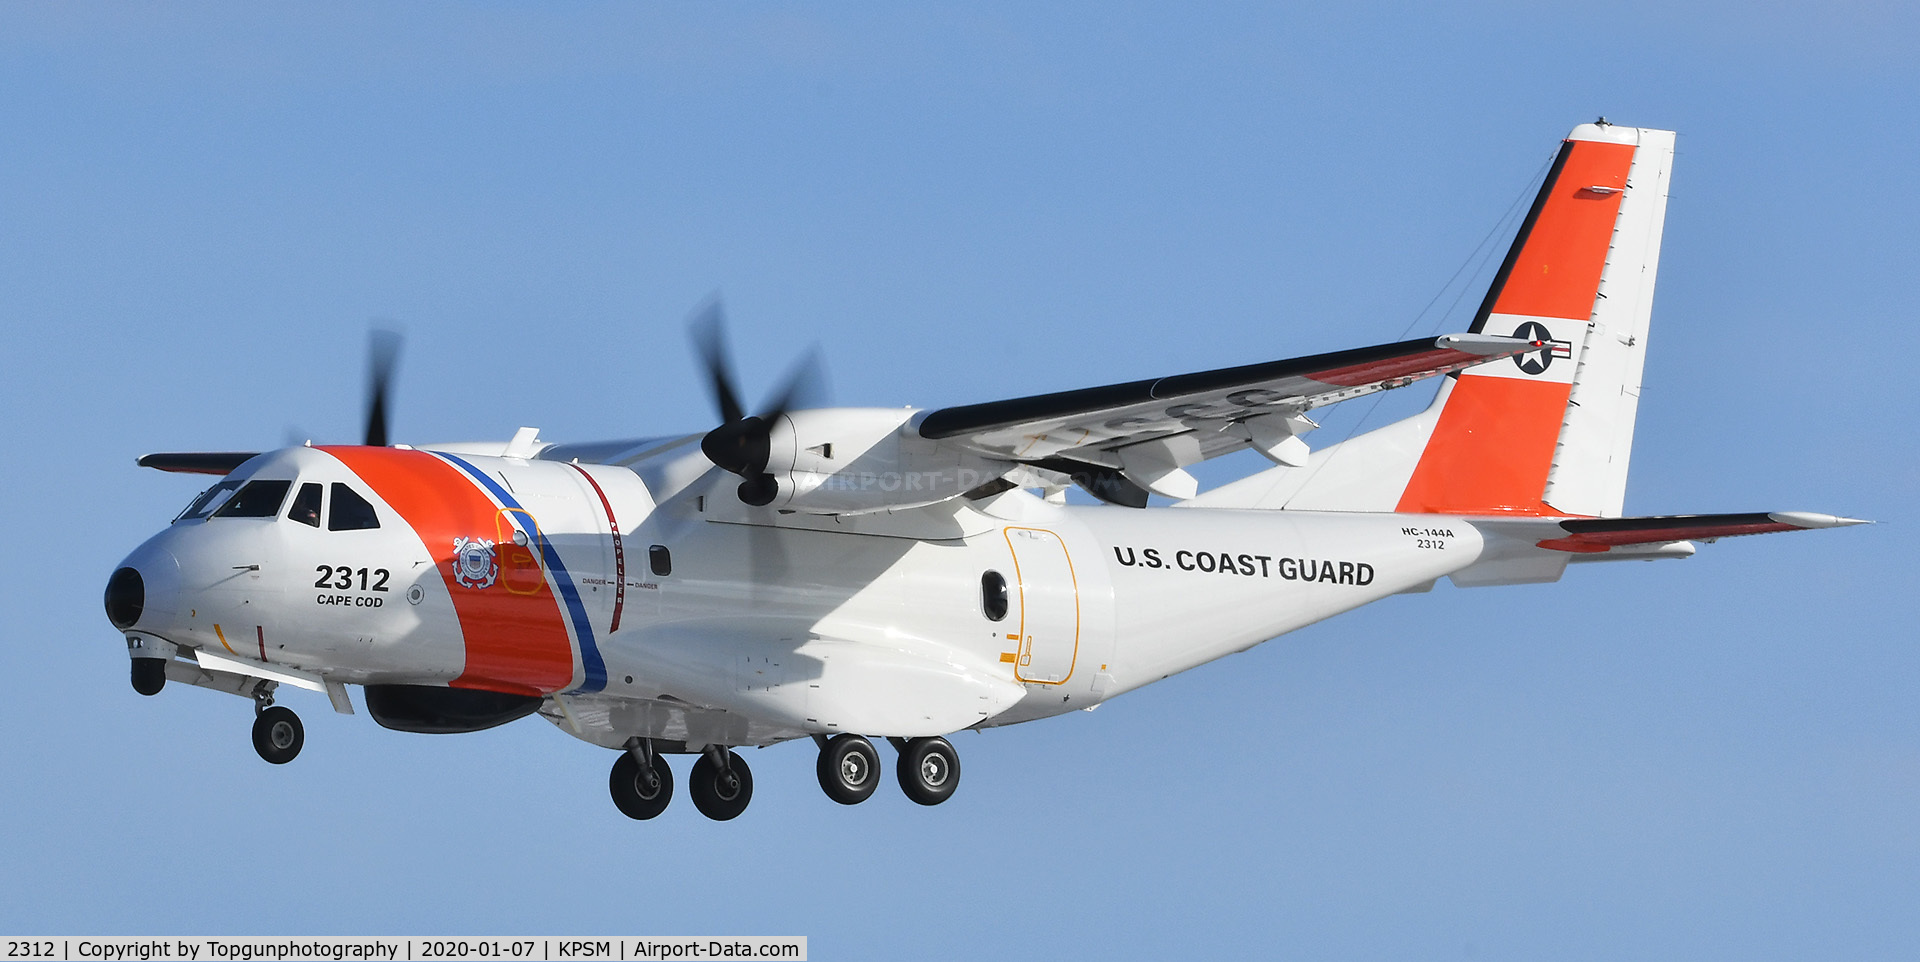 2312, 2010 Airtech HC-144A Ocean Sentry C/N 2312, US Coast Guard Ocean Century based out of Cape Cod MA